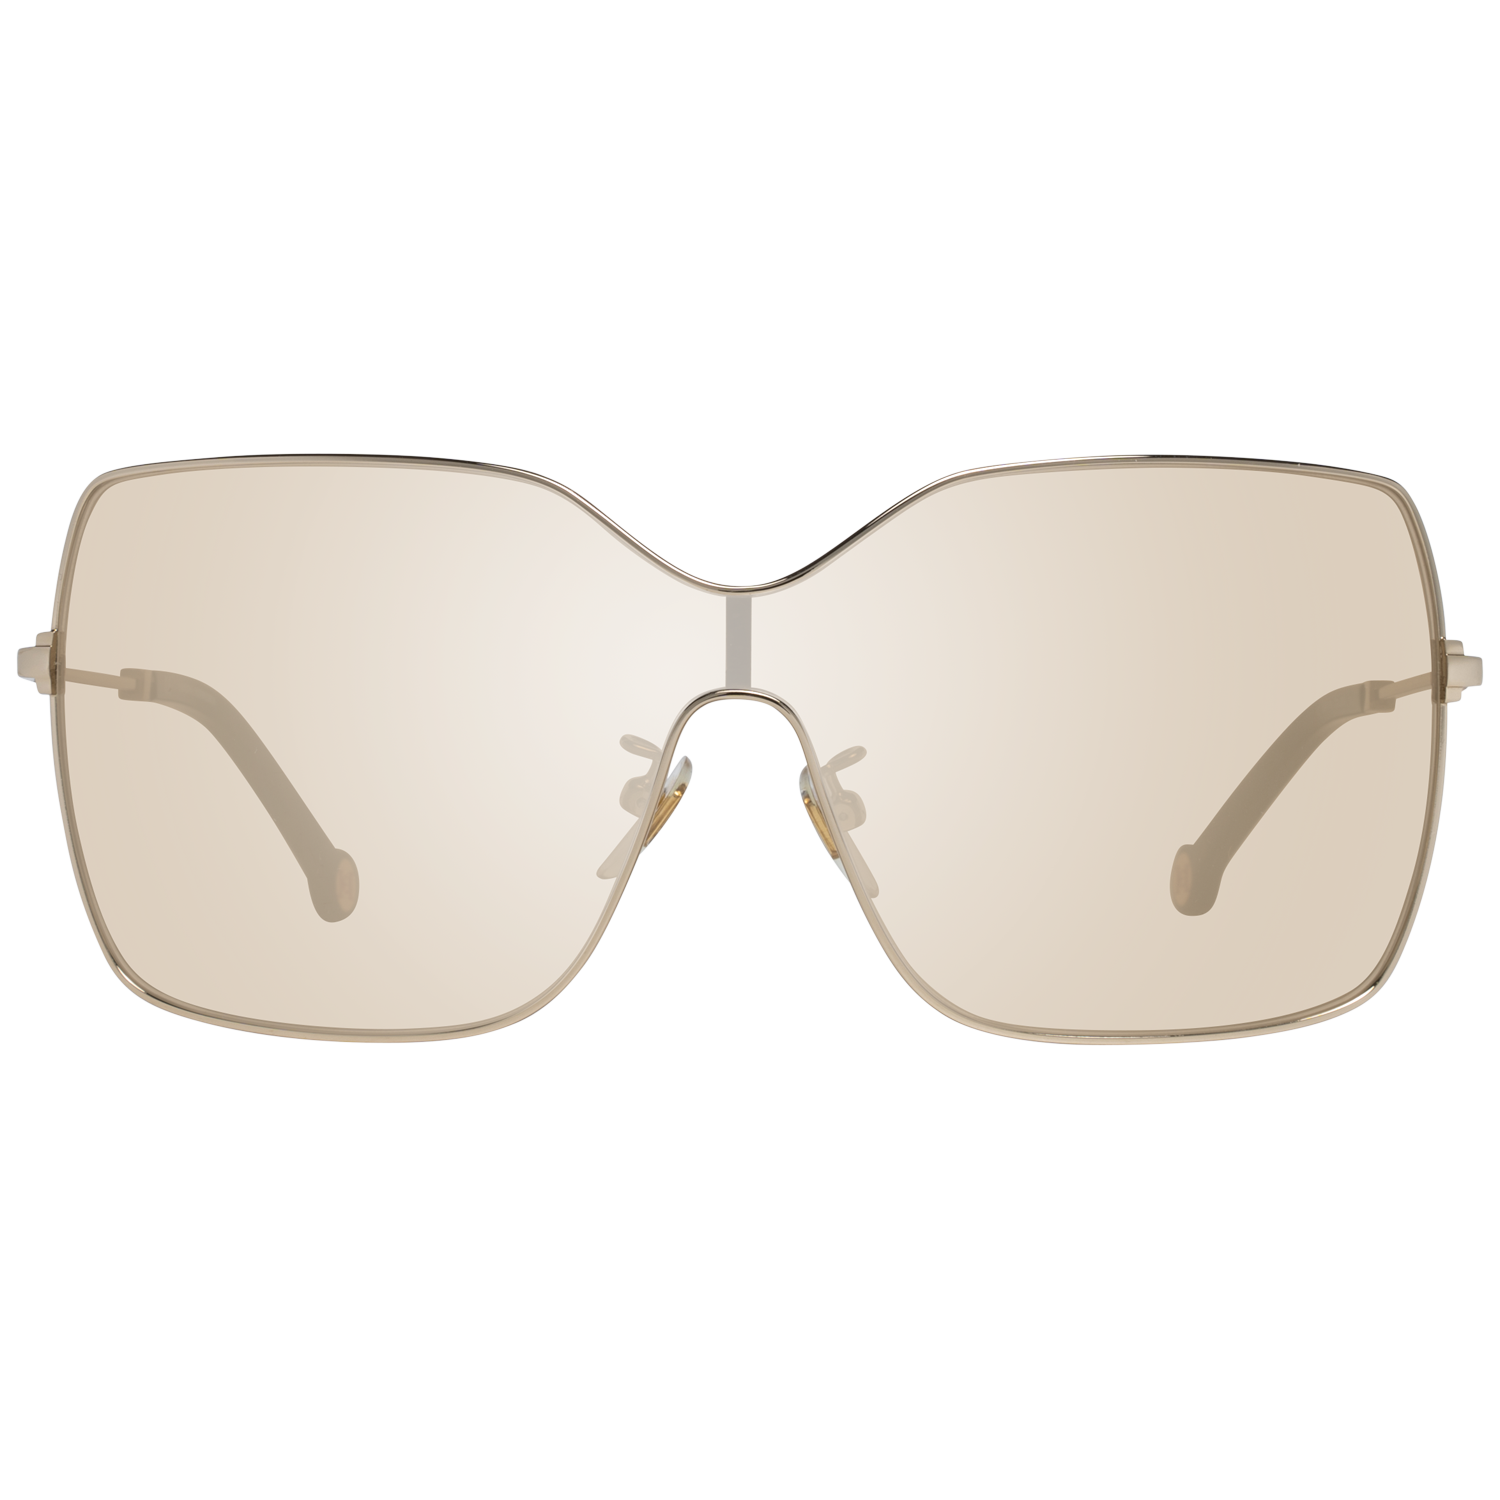 Carolina Herrera Sunglasses Carolina Herrera Sunglasses SHE175 300G 99 Eyeglasses Eyewear UK USA Australia 